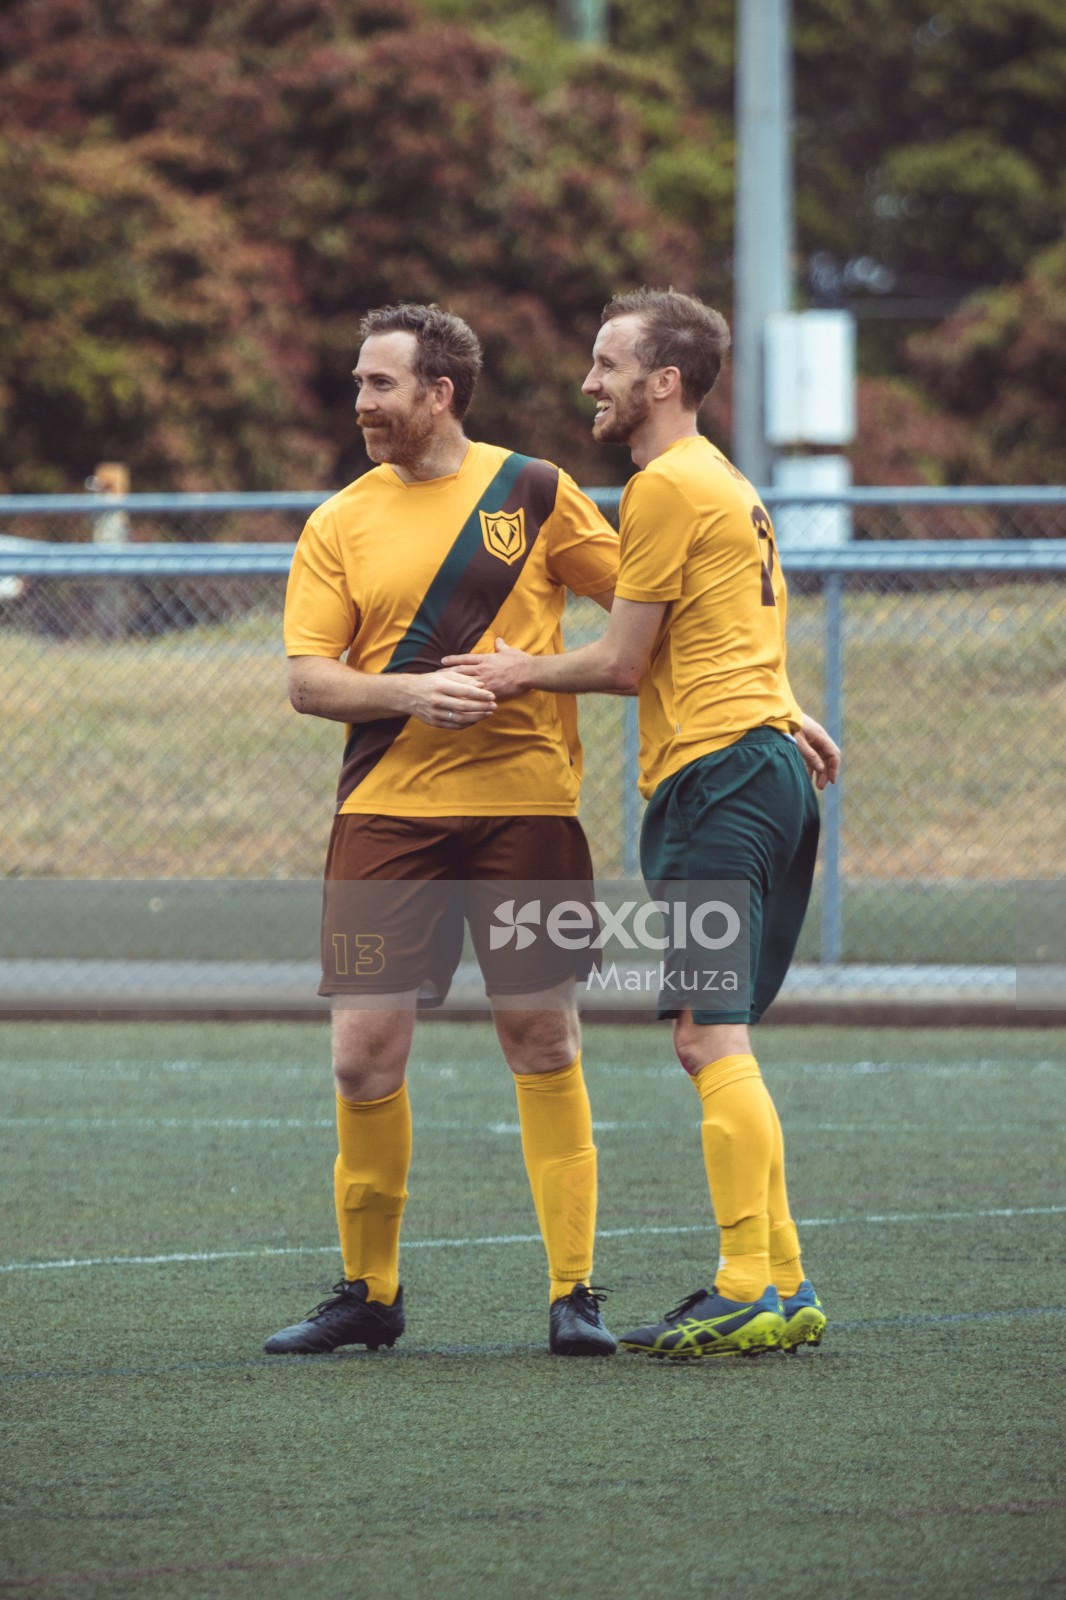 Two teammates smiling during celebration - Sports Zone sunday league